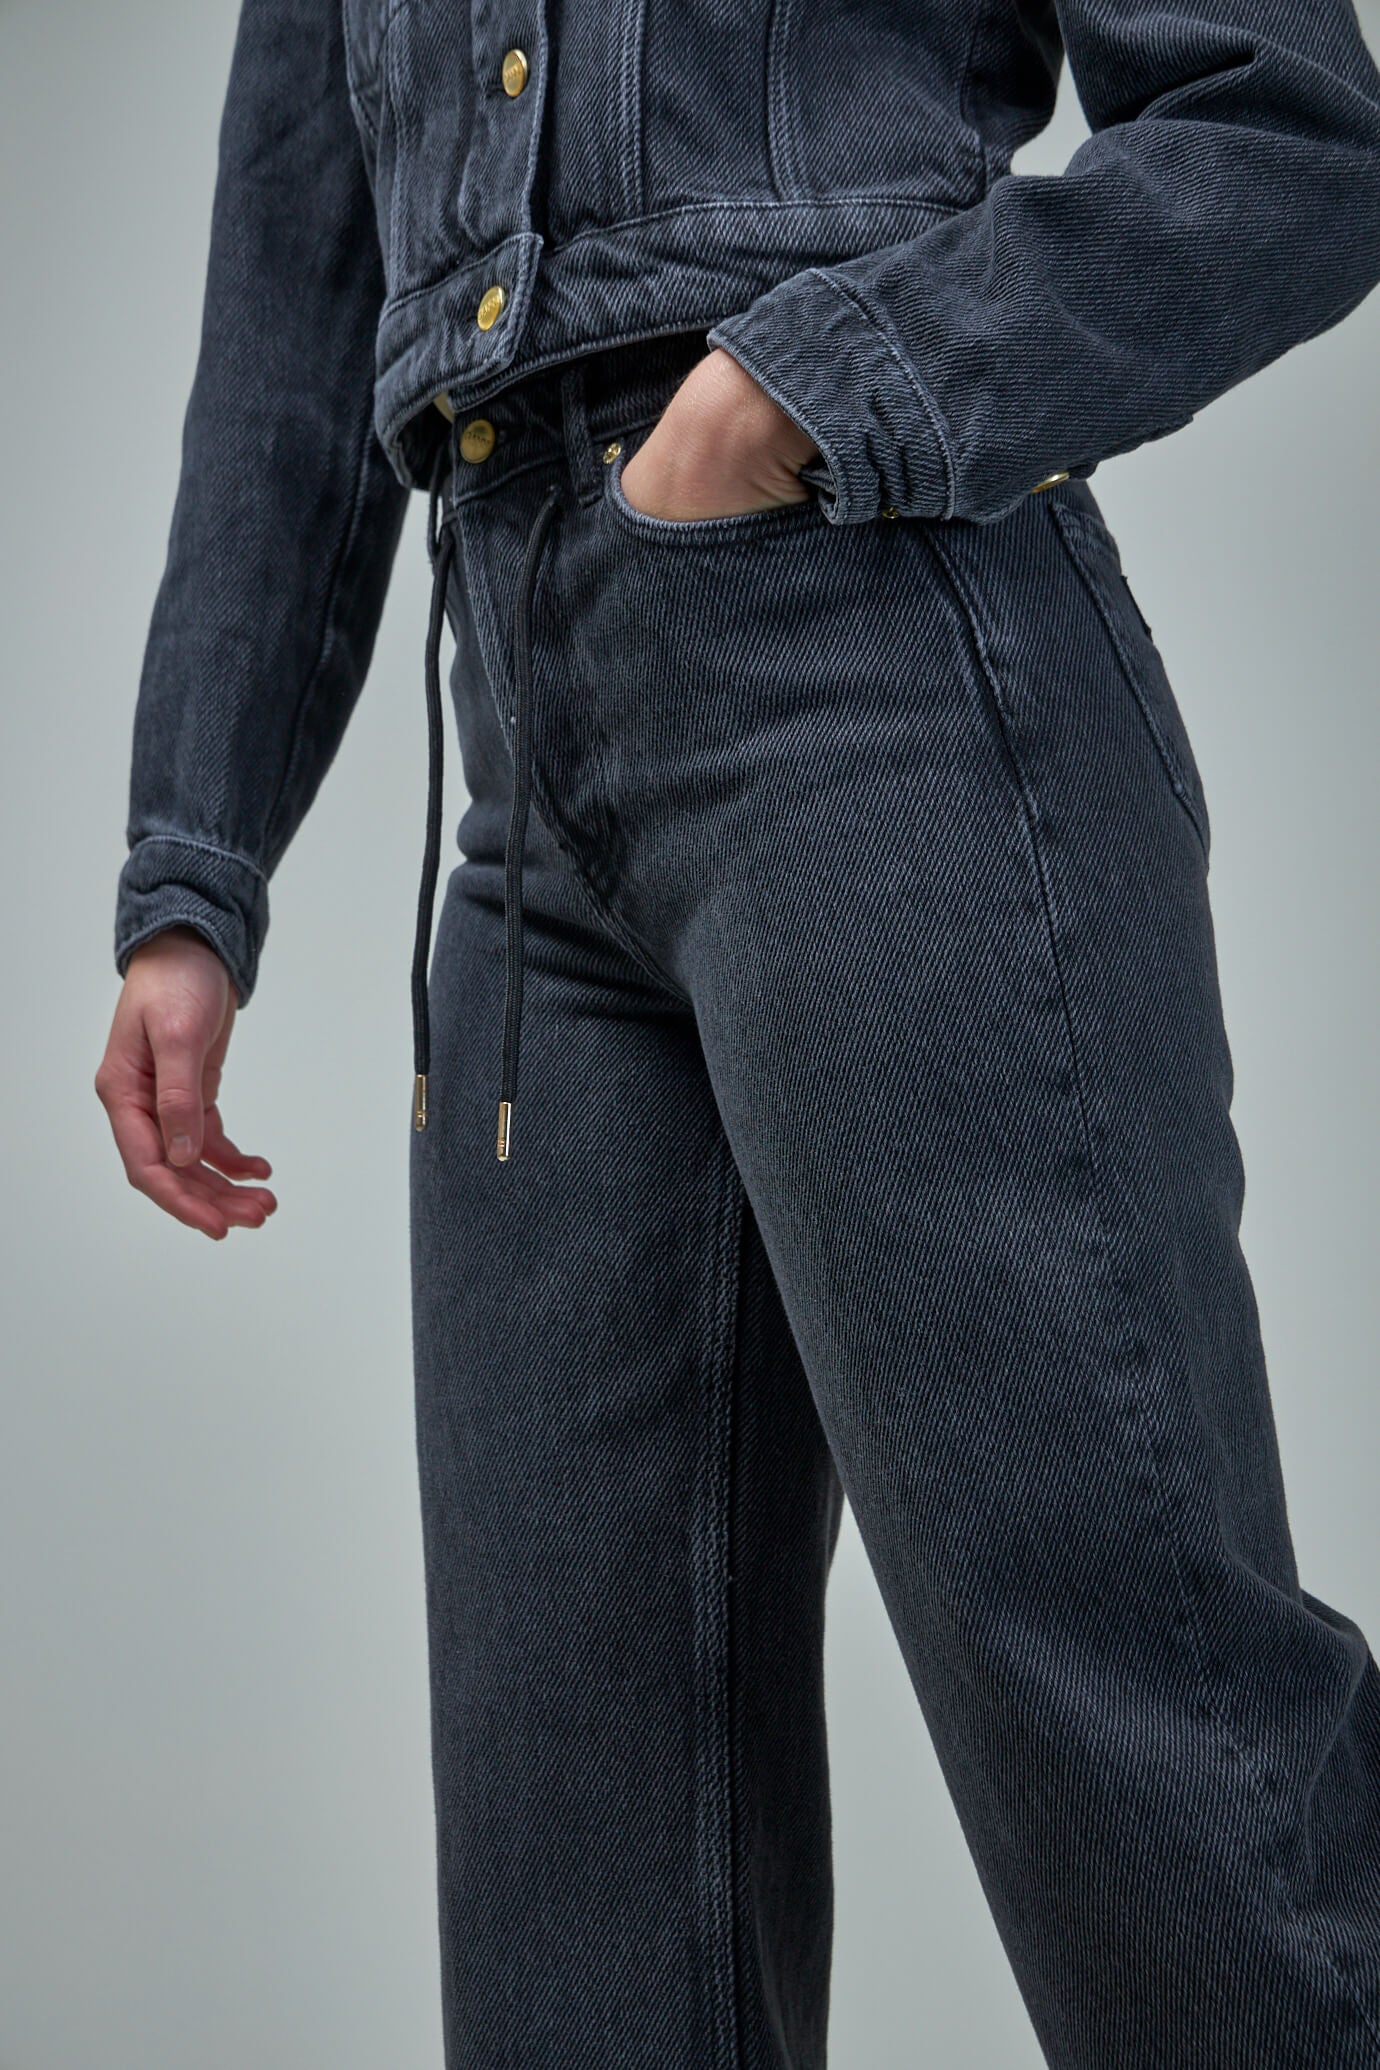 GANNI Heavy Denim Wide Drawstring Jeans